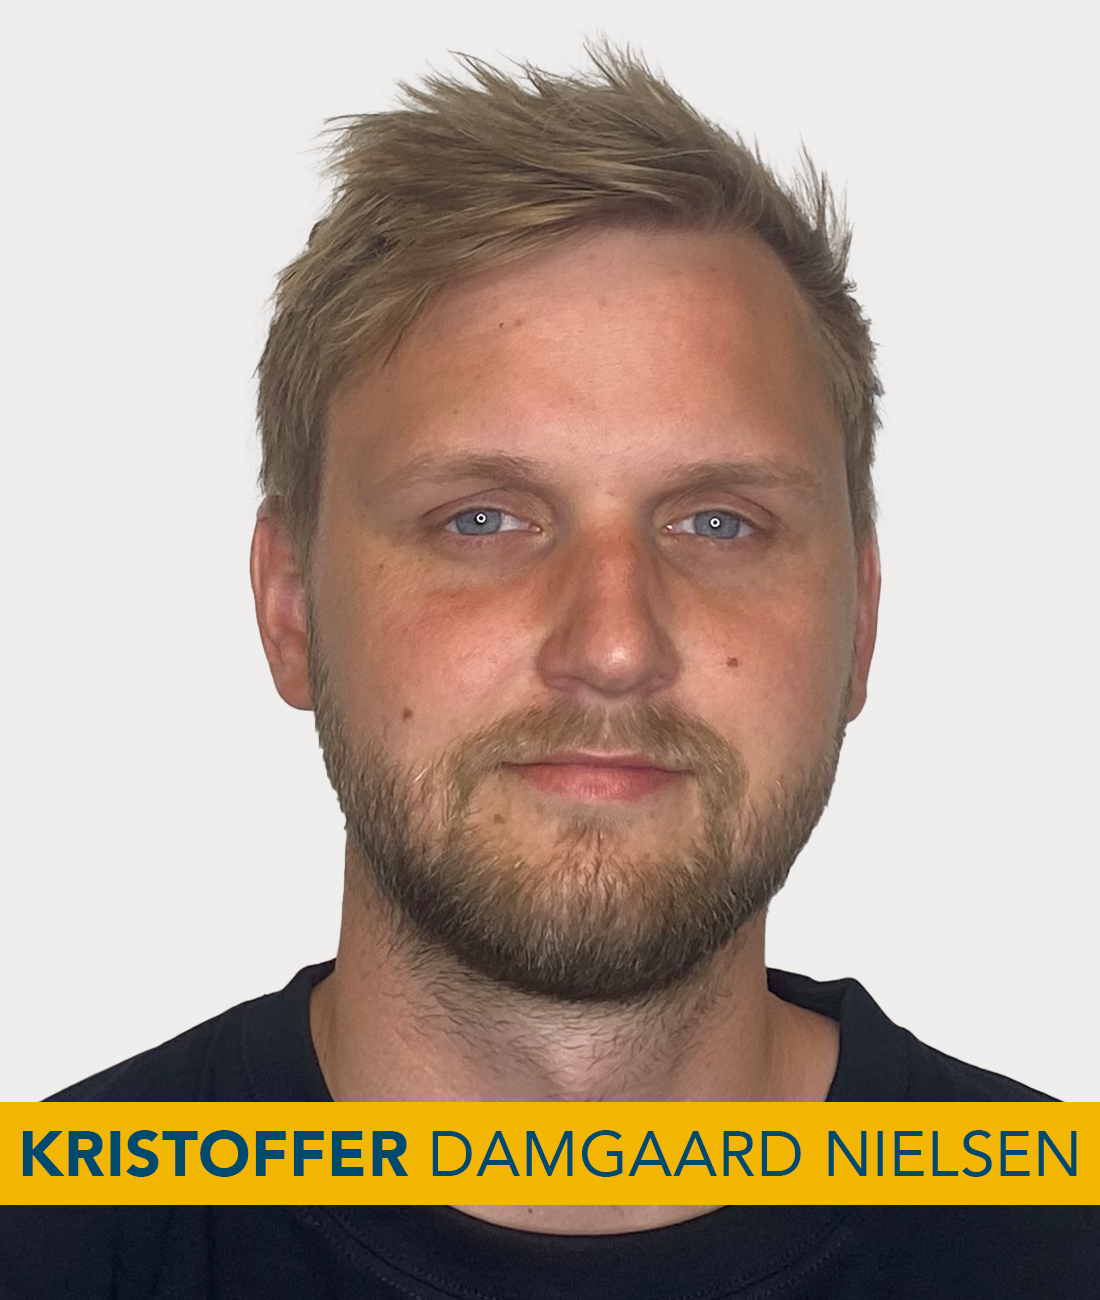 Kristoffer Damgaard Nielsen